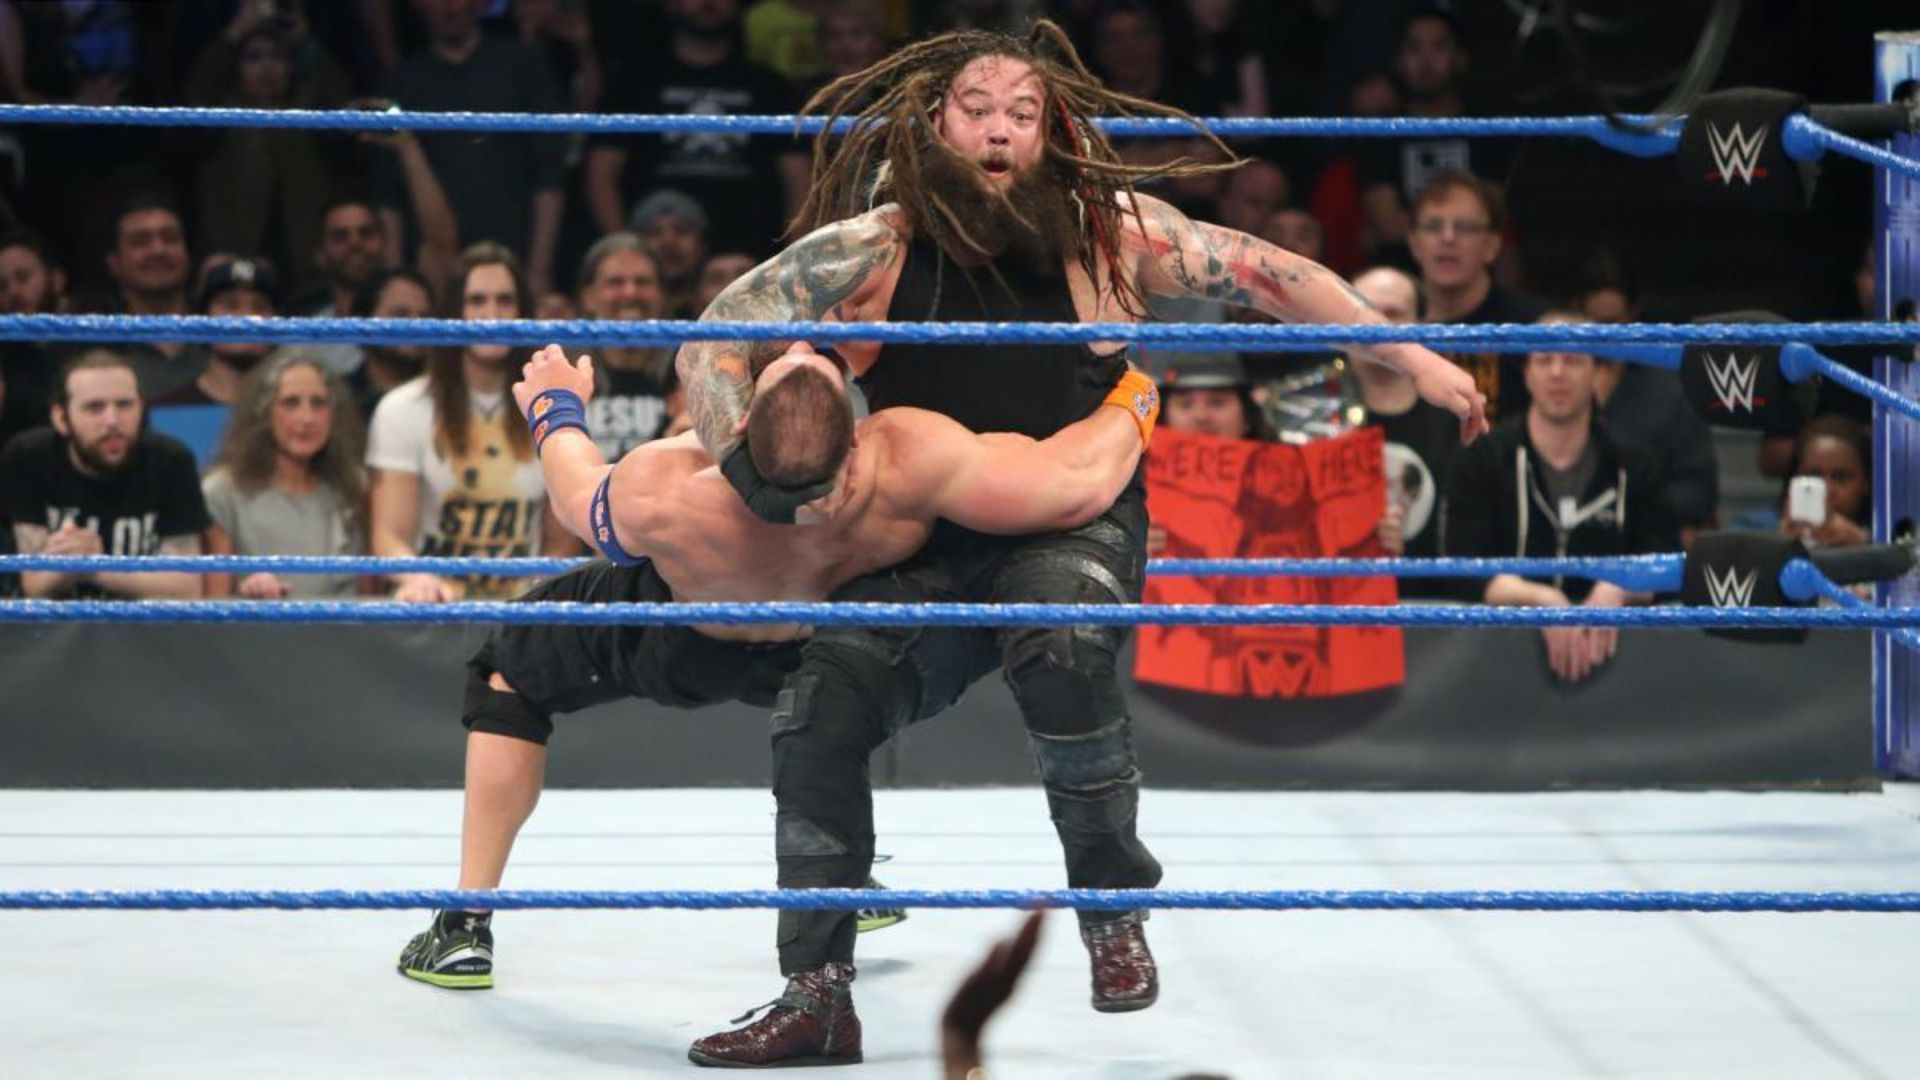 Bray Wyatt hitting John Cena with Sister Abigail